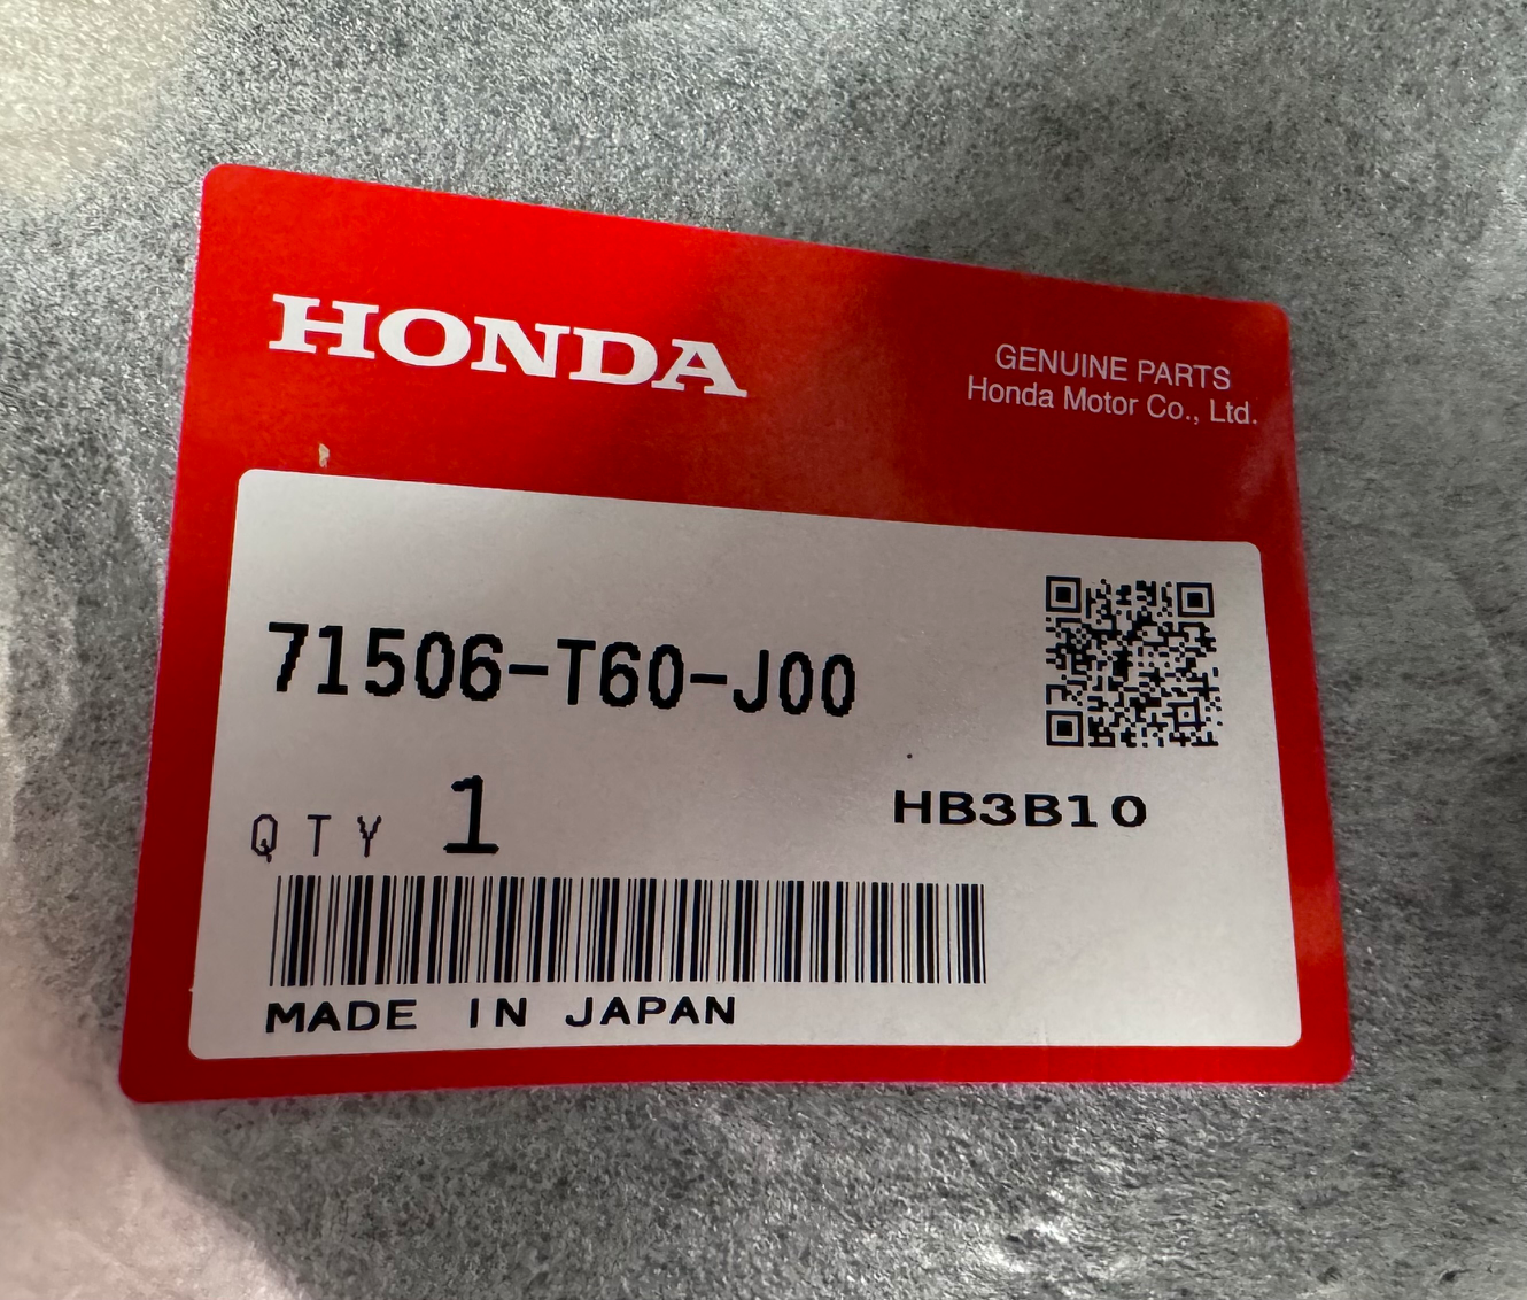 11th Gen Honda Civic EVS Tow Hooks Review IMG_5987